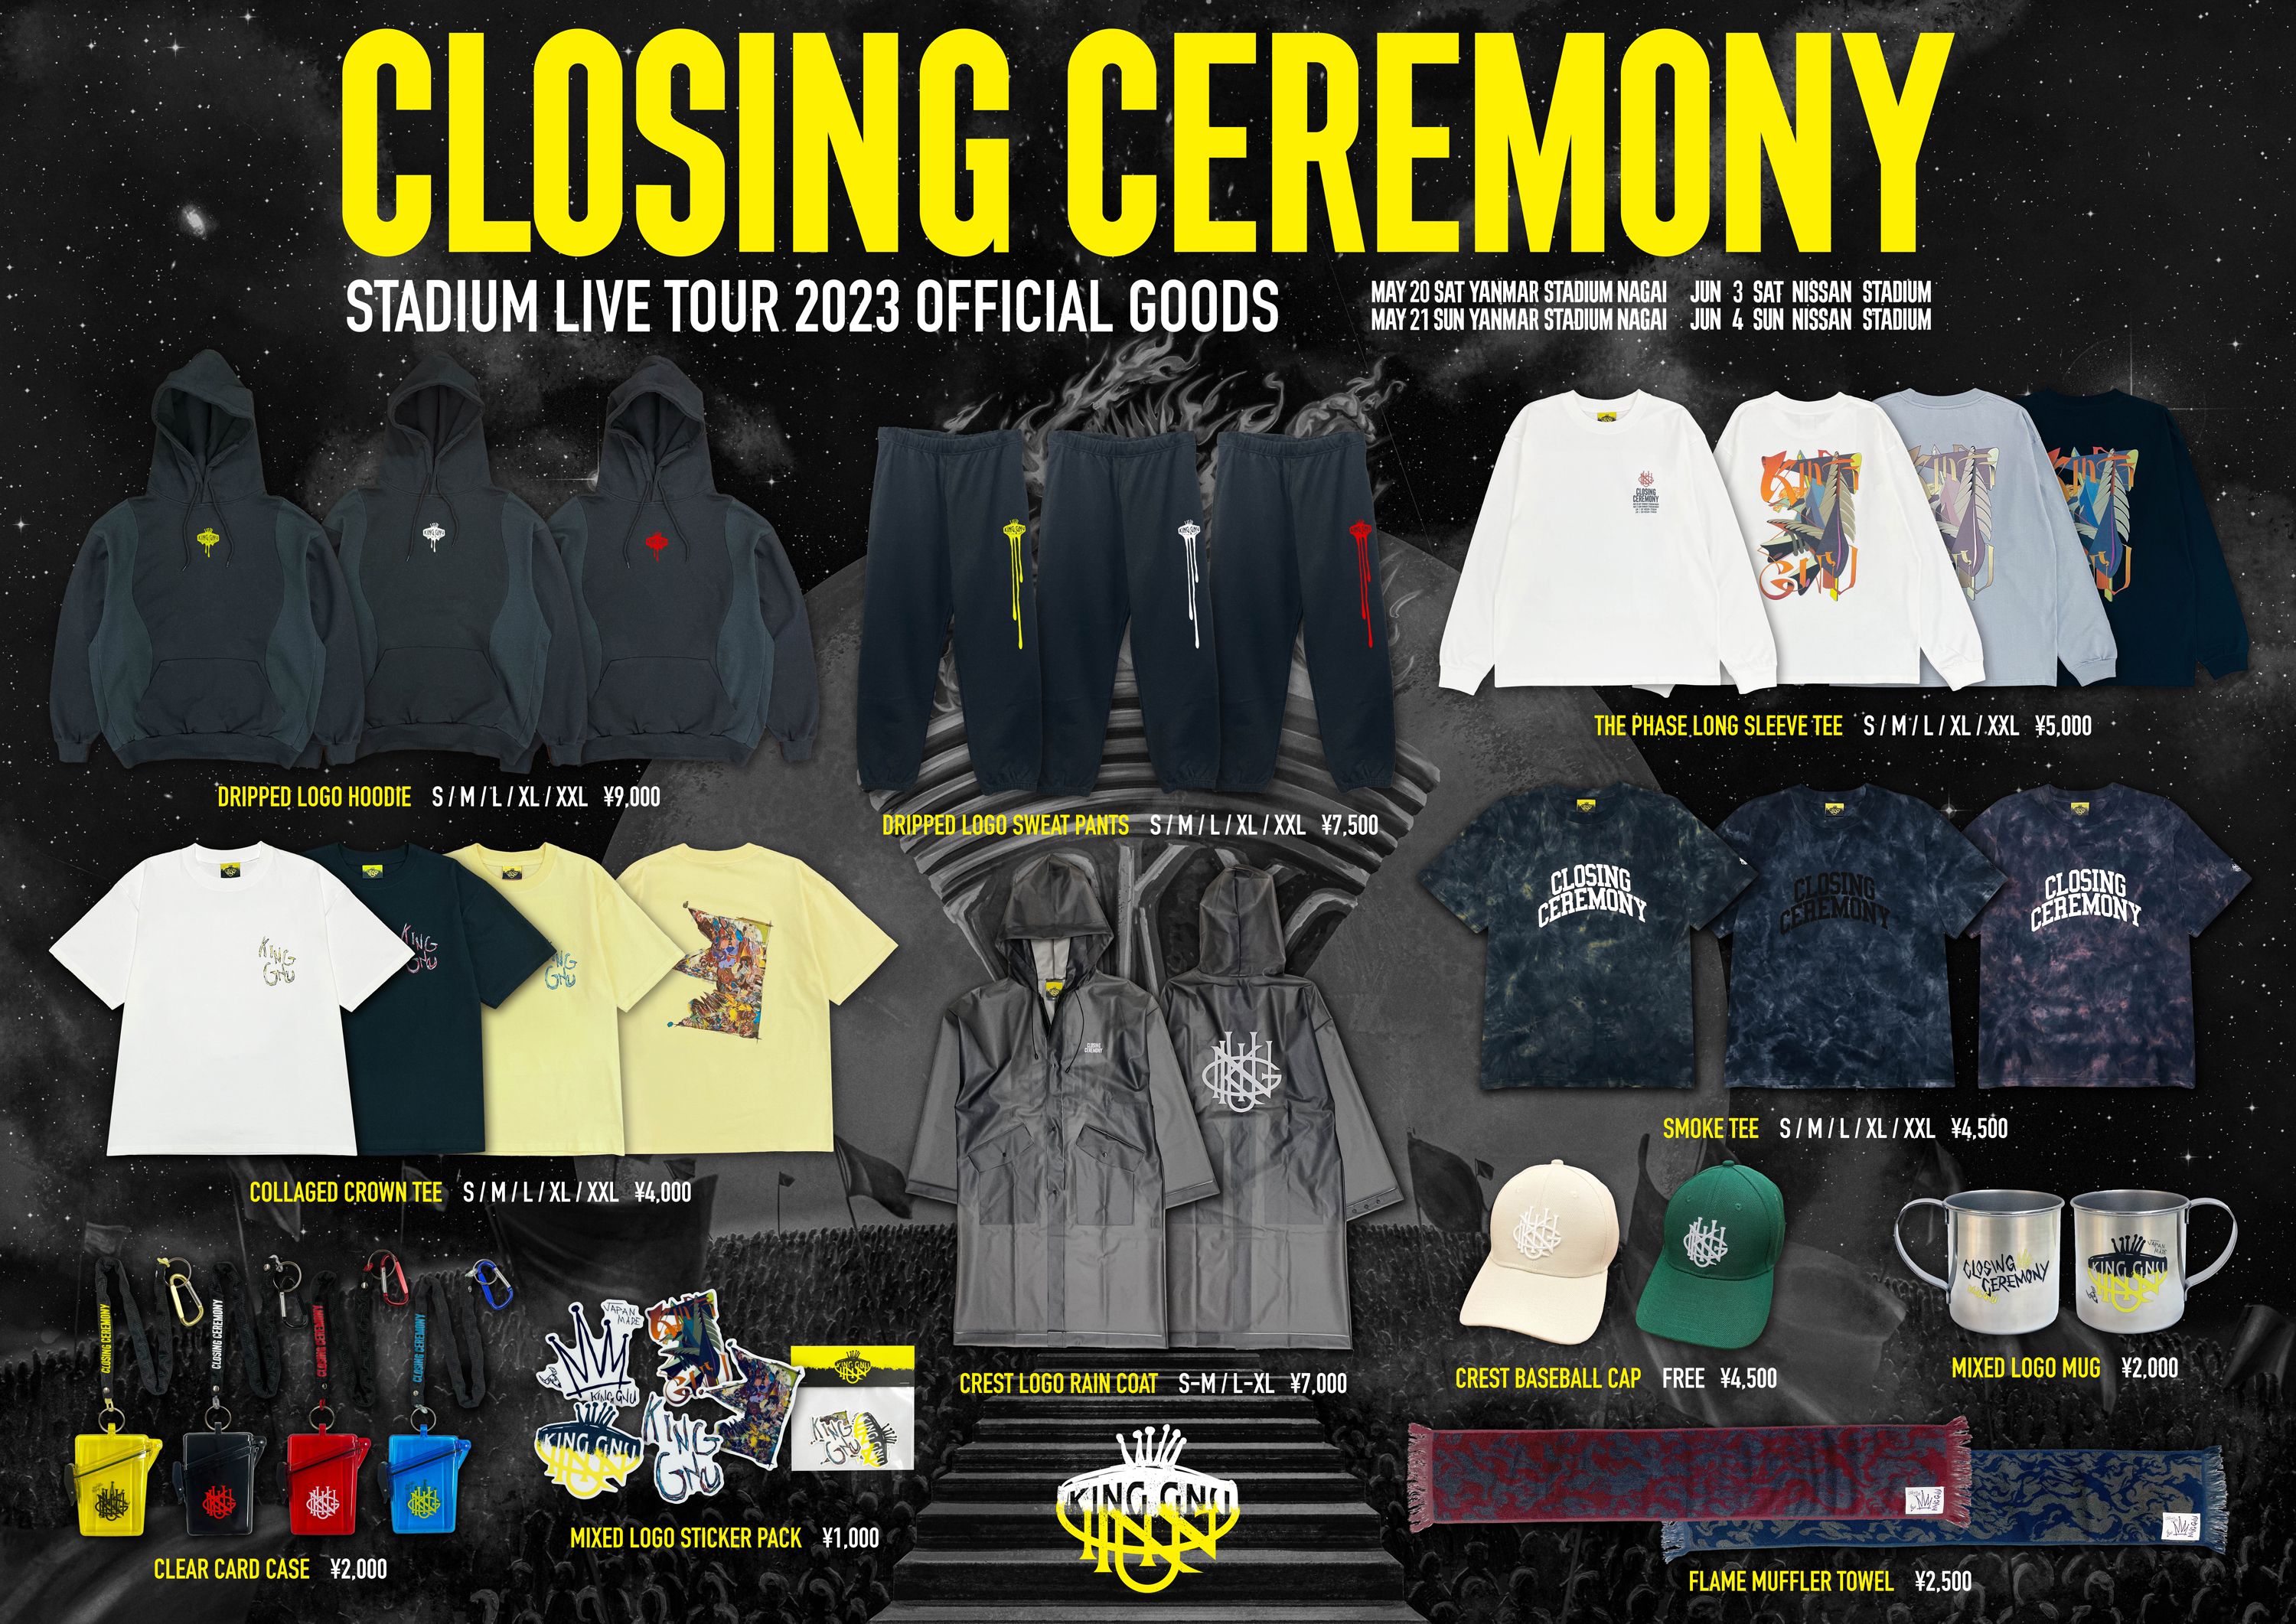 King Gnu Stadium Live Tour 2023 CLOSING CEREMONY 会場物販注意事項